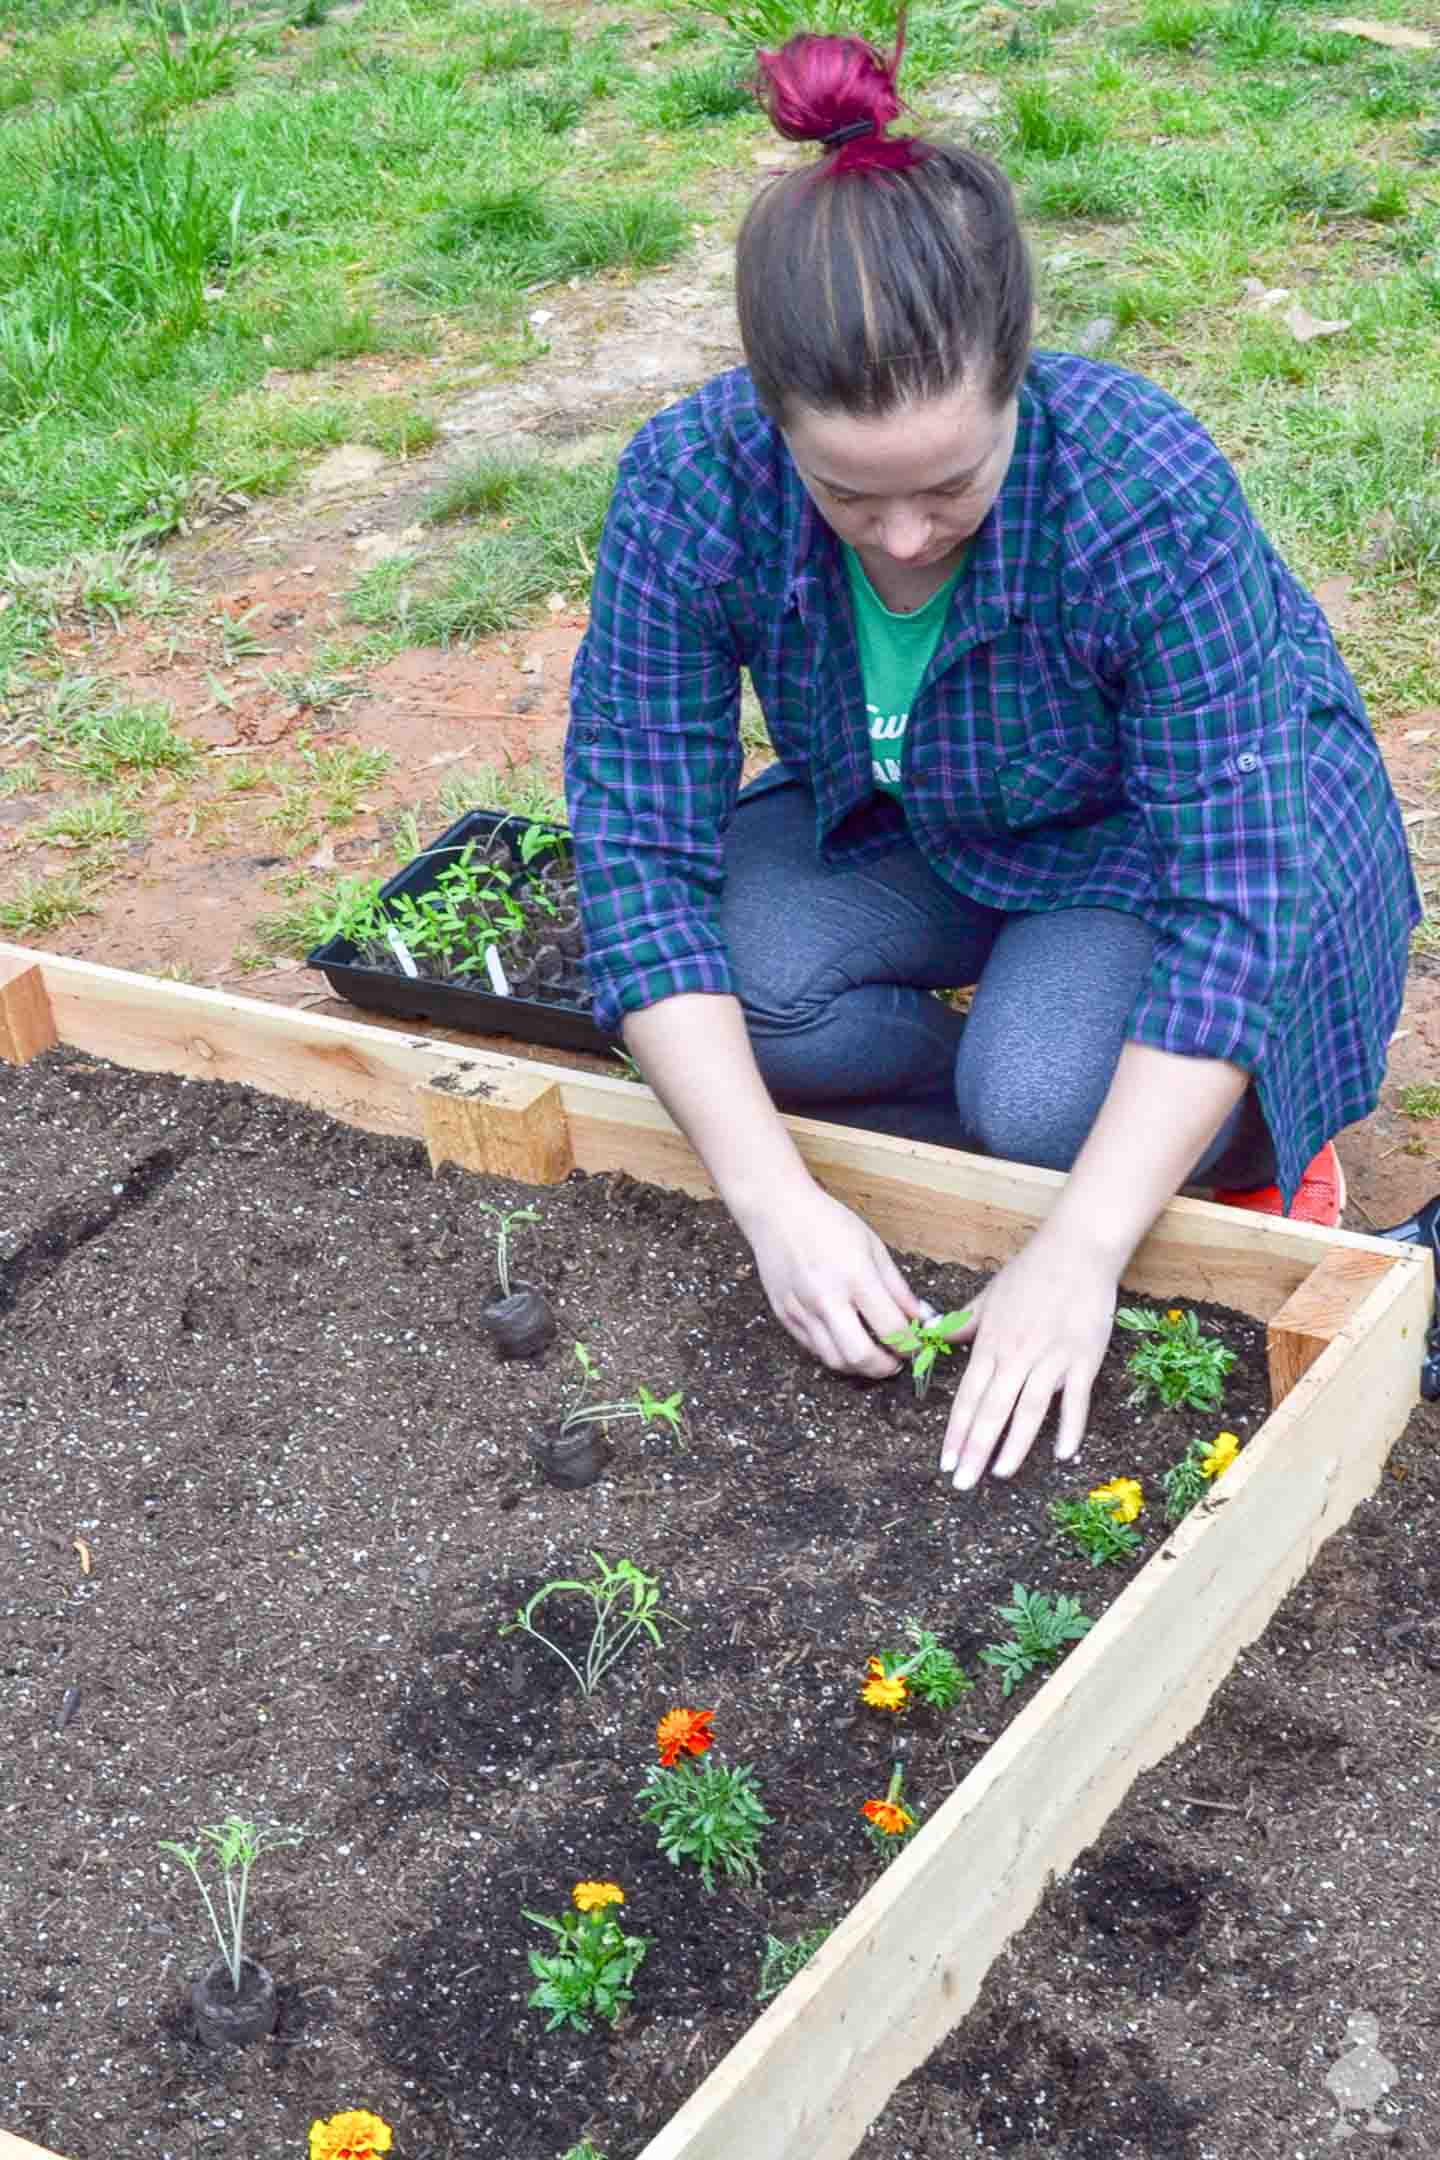 What Type of Garden Soil Is Best for Raised Beds? • Gardenary